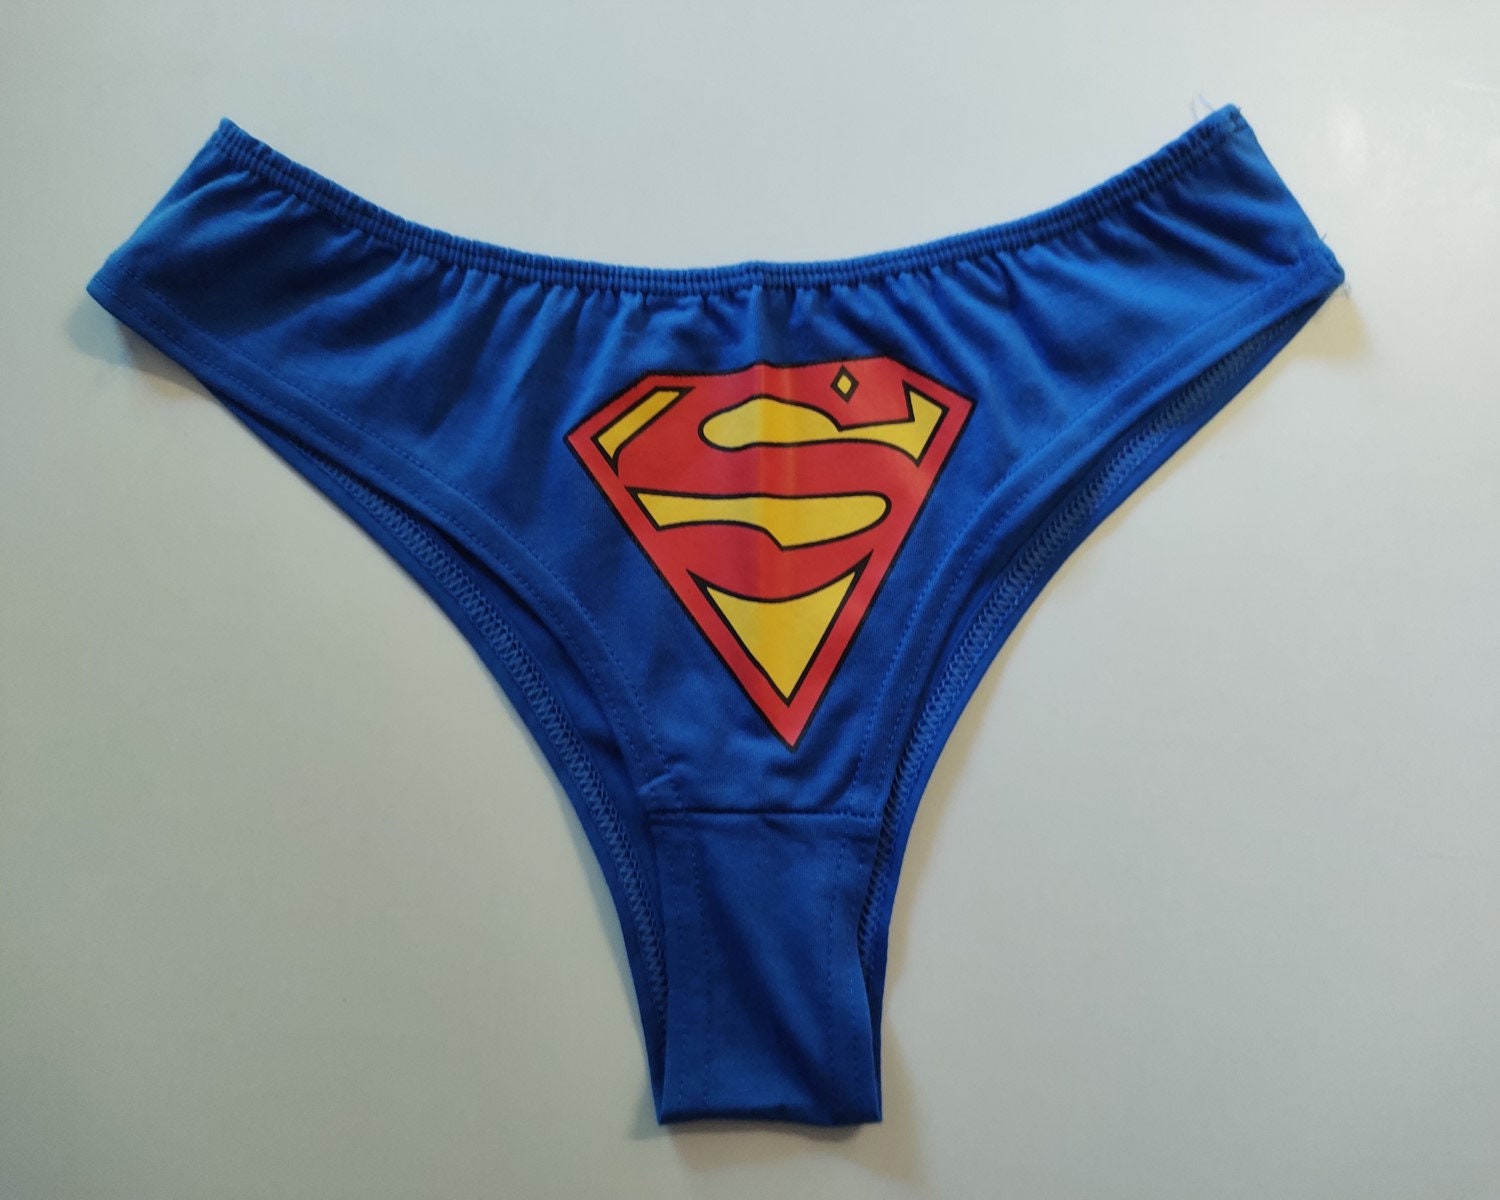 SUPERMAN Themed ~ Ladies Women's Panties Underwear ~ XS S M L XL